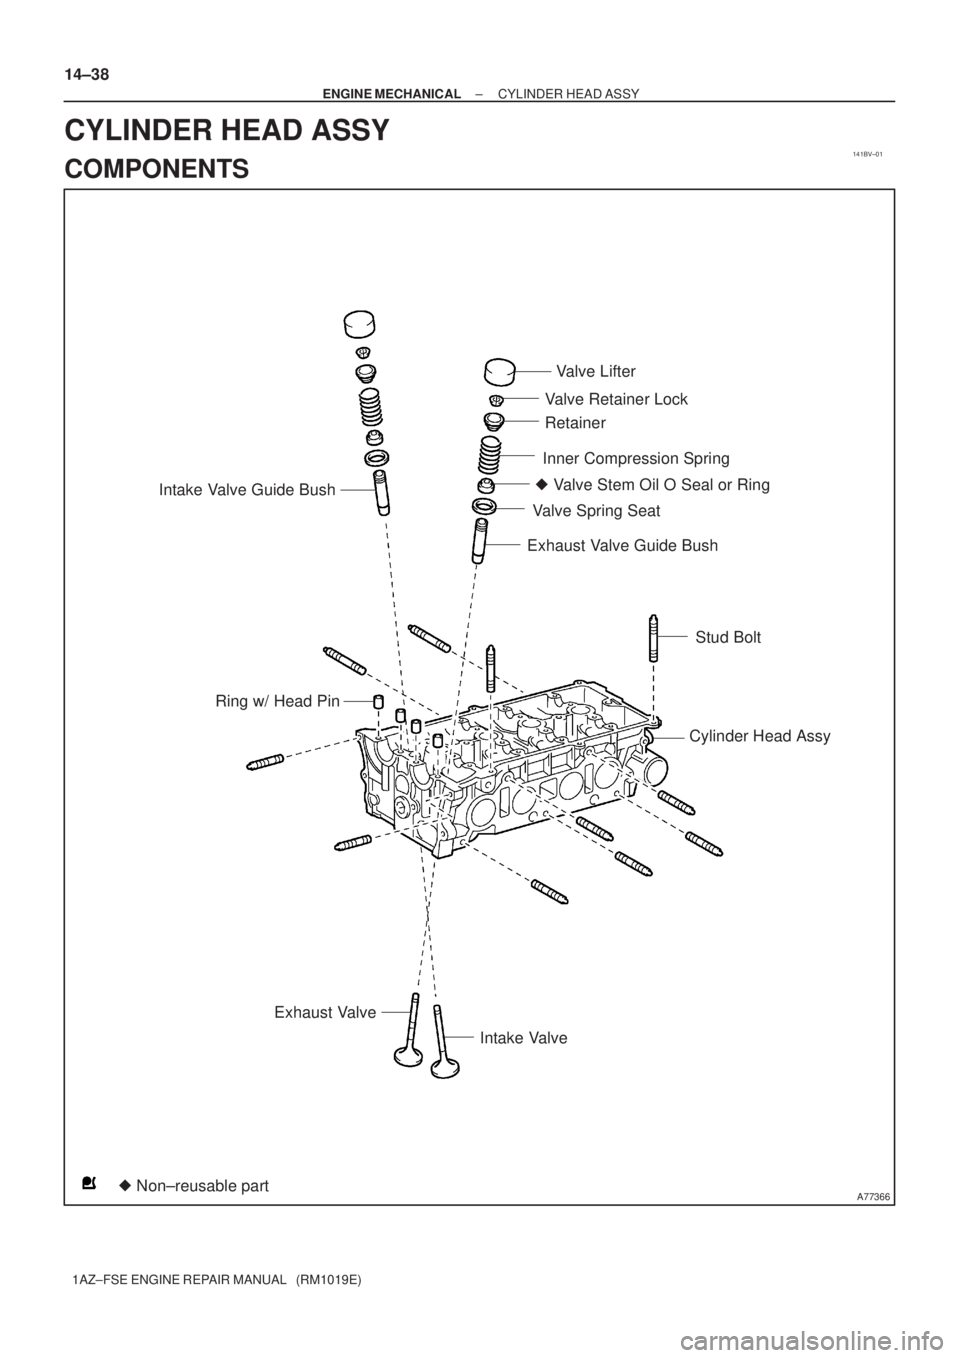 TOYOTA AVENSIS 2005  Service Repair Manual 141BV±01
A77366
Intake Valve Guide Bush
 Non±reusable part Valve Stem Oil O Seal or RingValve Lifter
Valve Retainer Lock
Retainer
Inner Compression Spring
Valve Spring Seat
Exhaust Valve Guide Bus